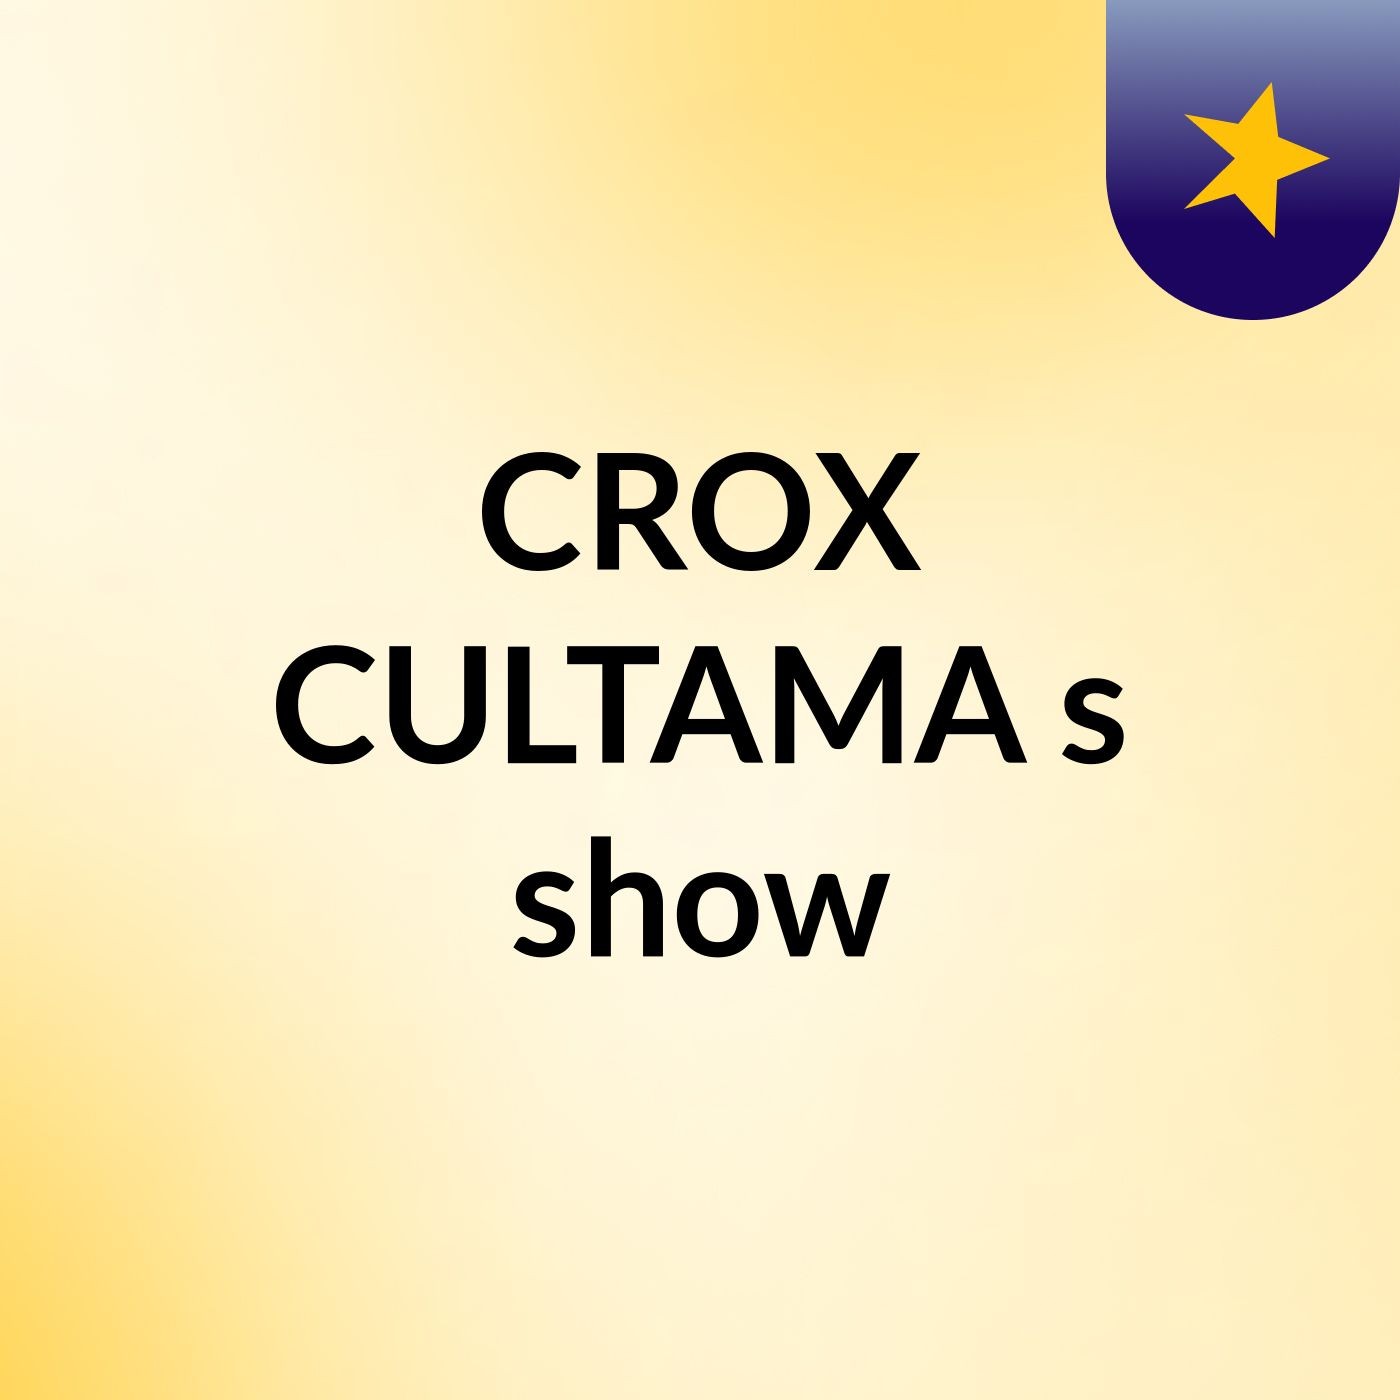 CROX CULTAMA's show